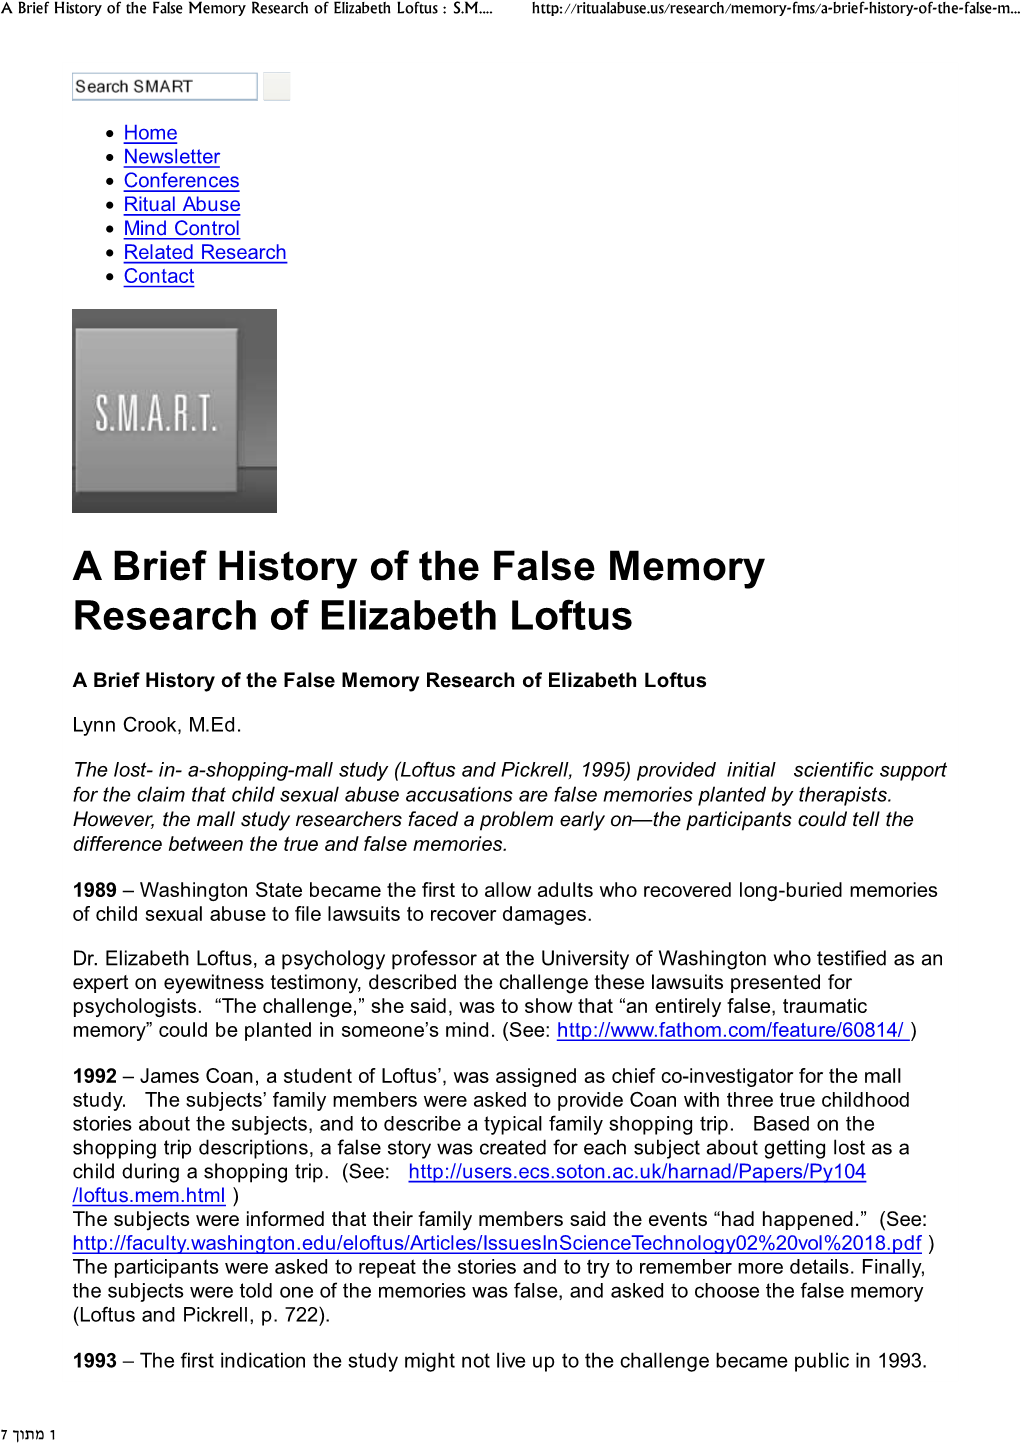 A Brief History of the False Memory Research of Elizabeth Loftus : S.M